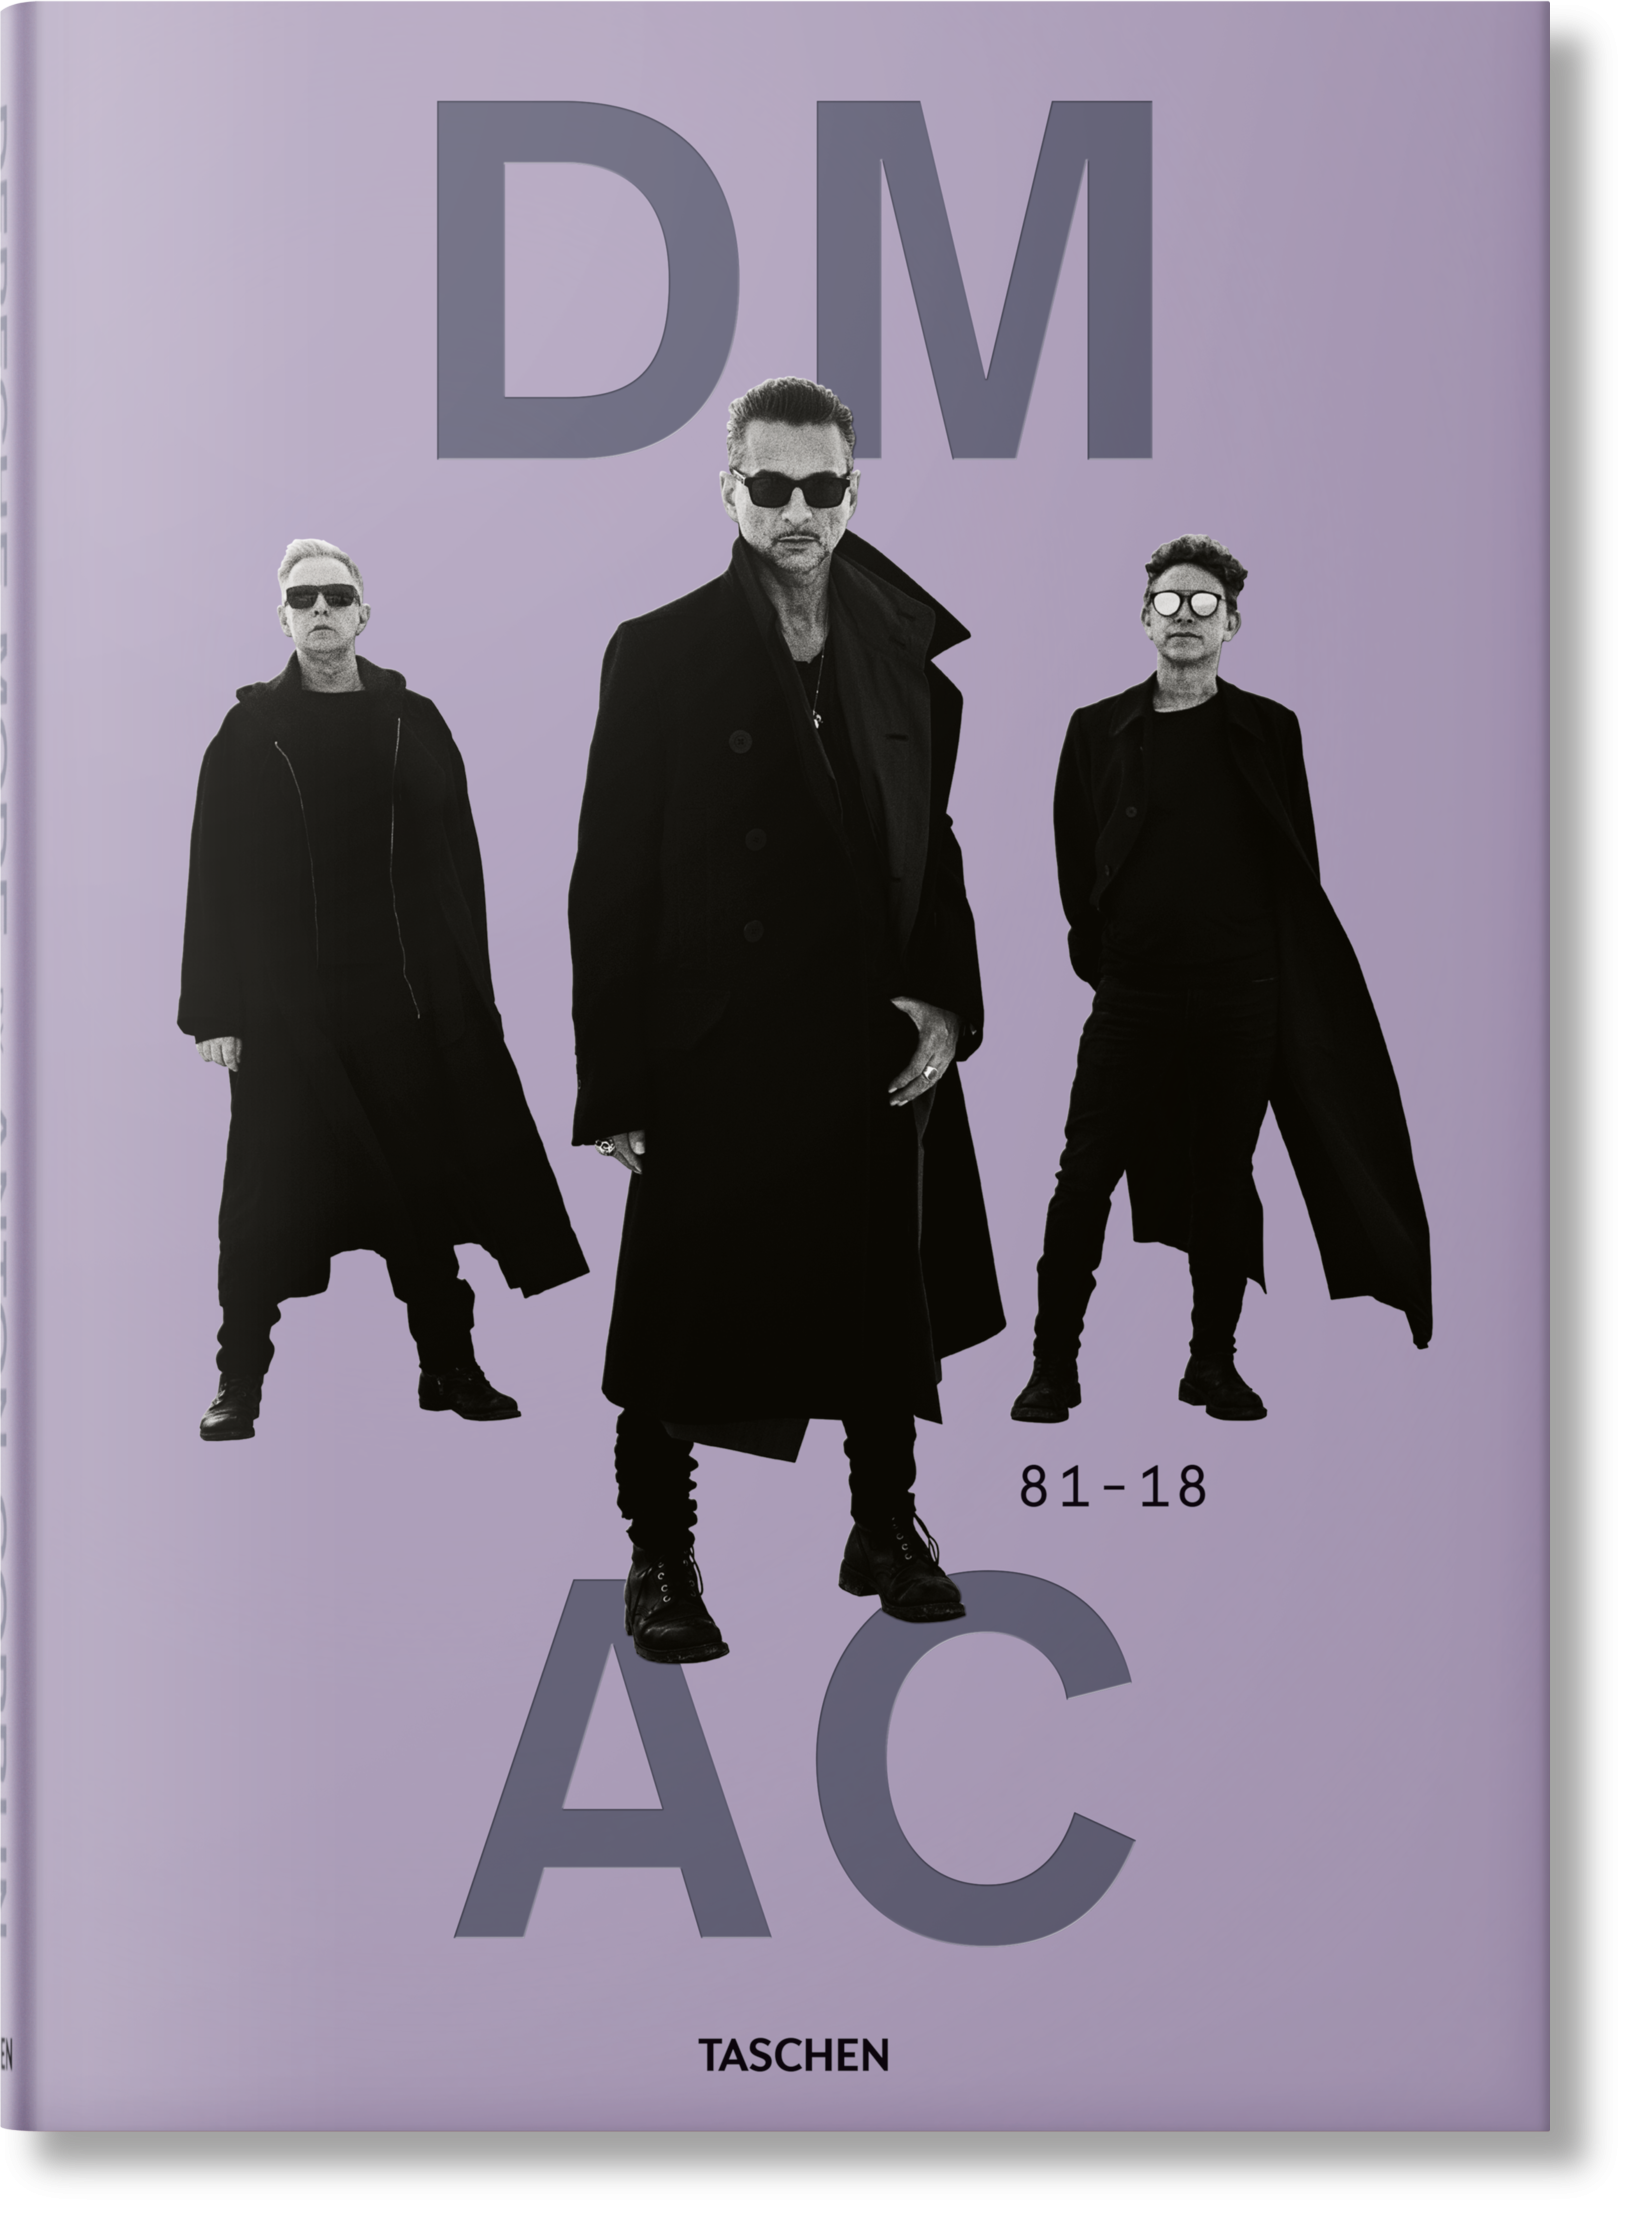 TASCHEN Books: Depeche Mode by Anton Corbijn